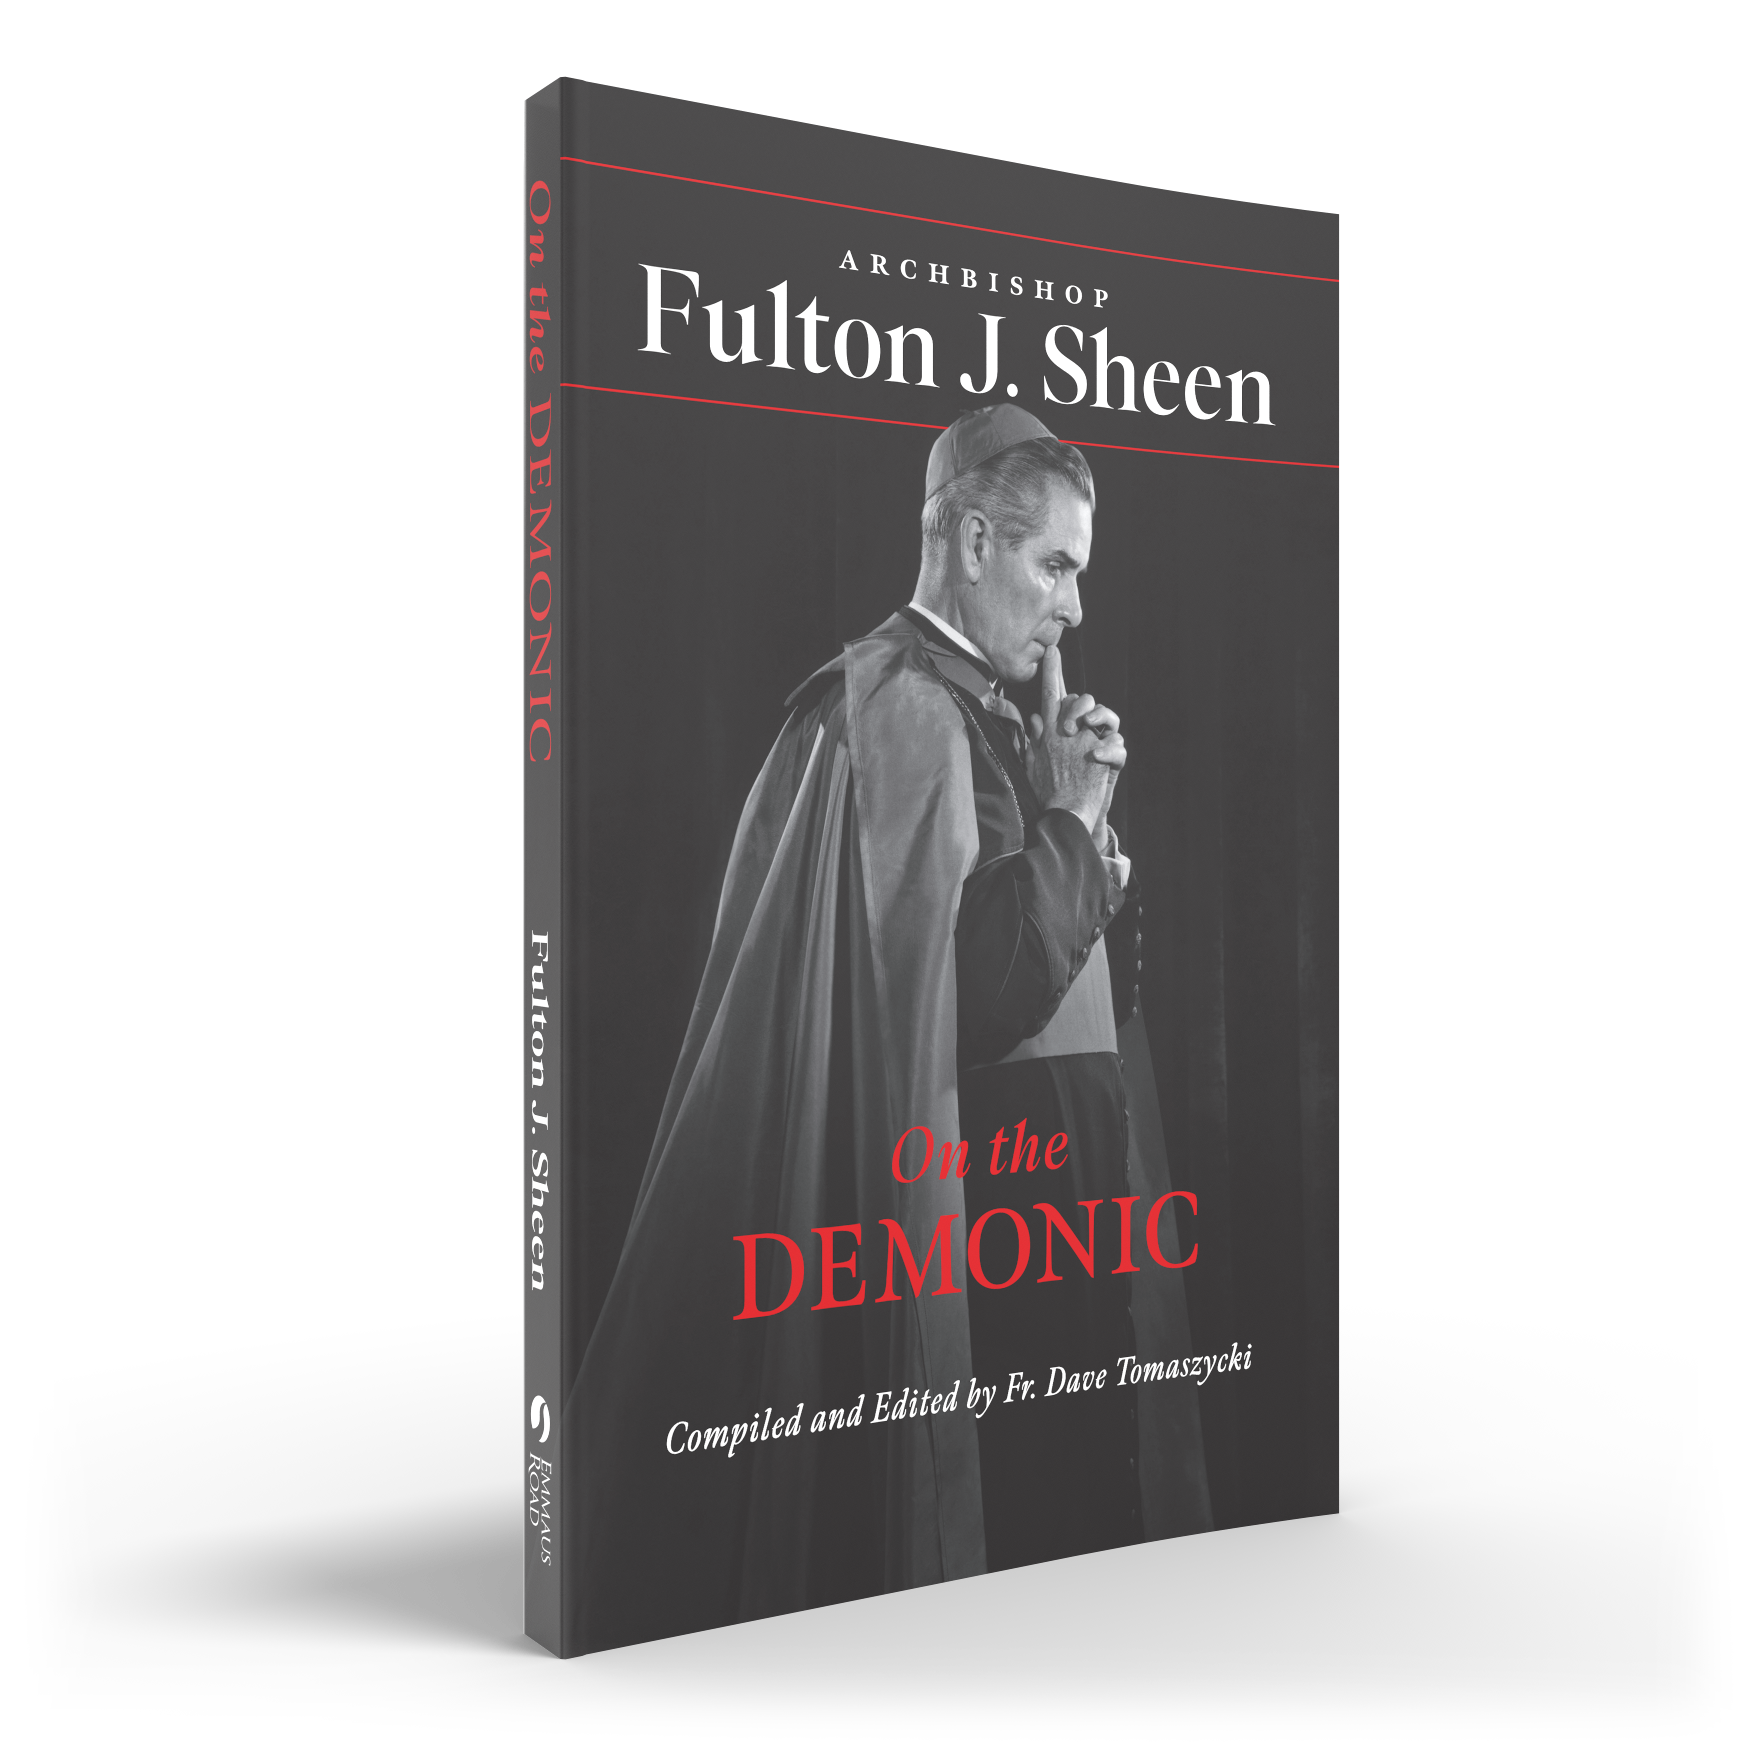 Fulton Sheen - On the Demonic - New Book